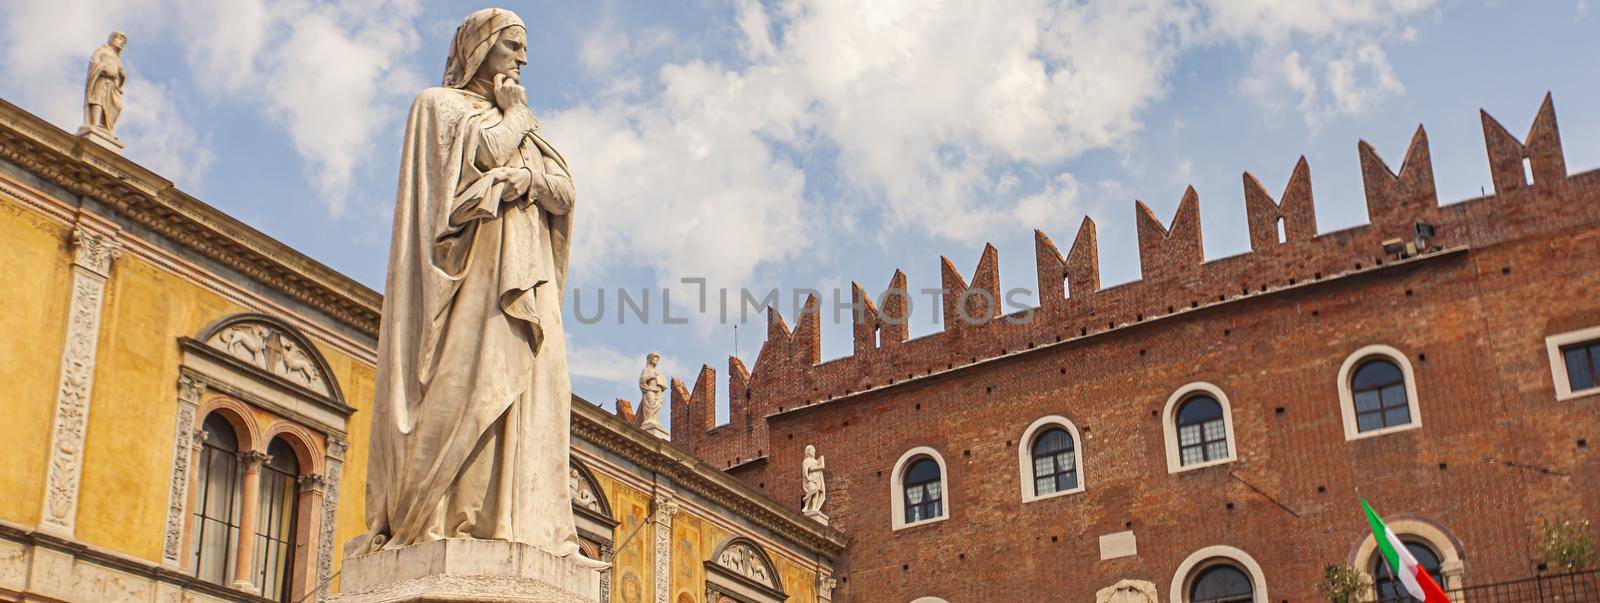 Verona Dante statue by pippocarlot